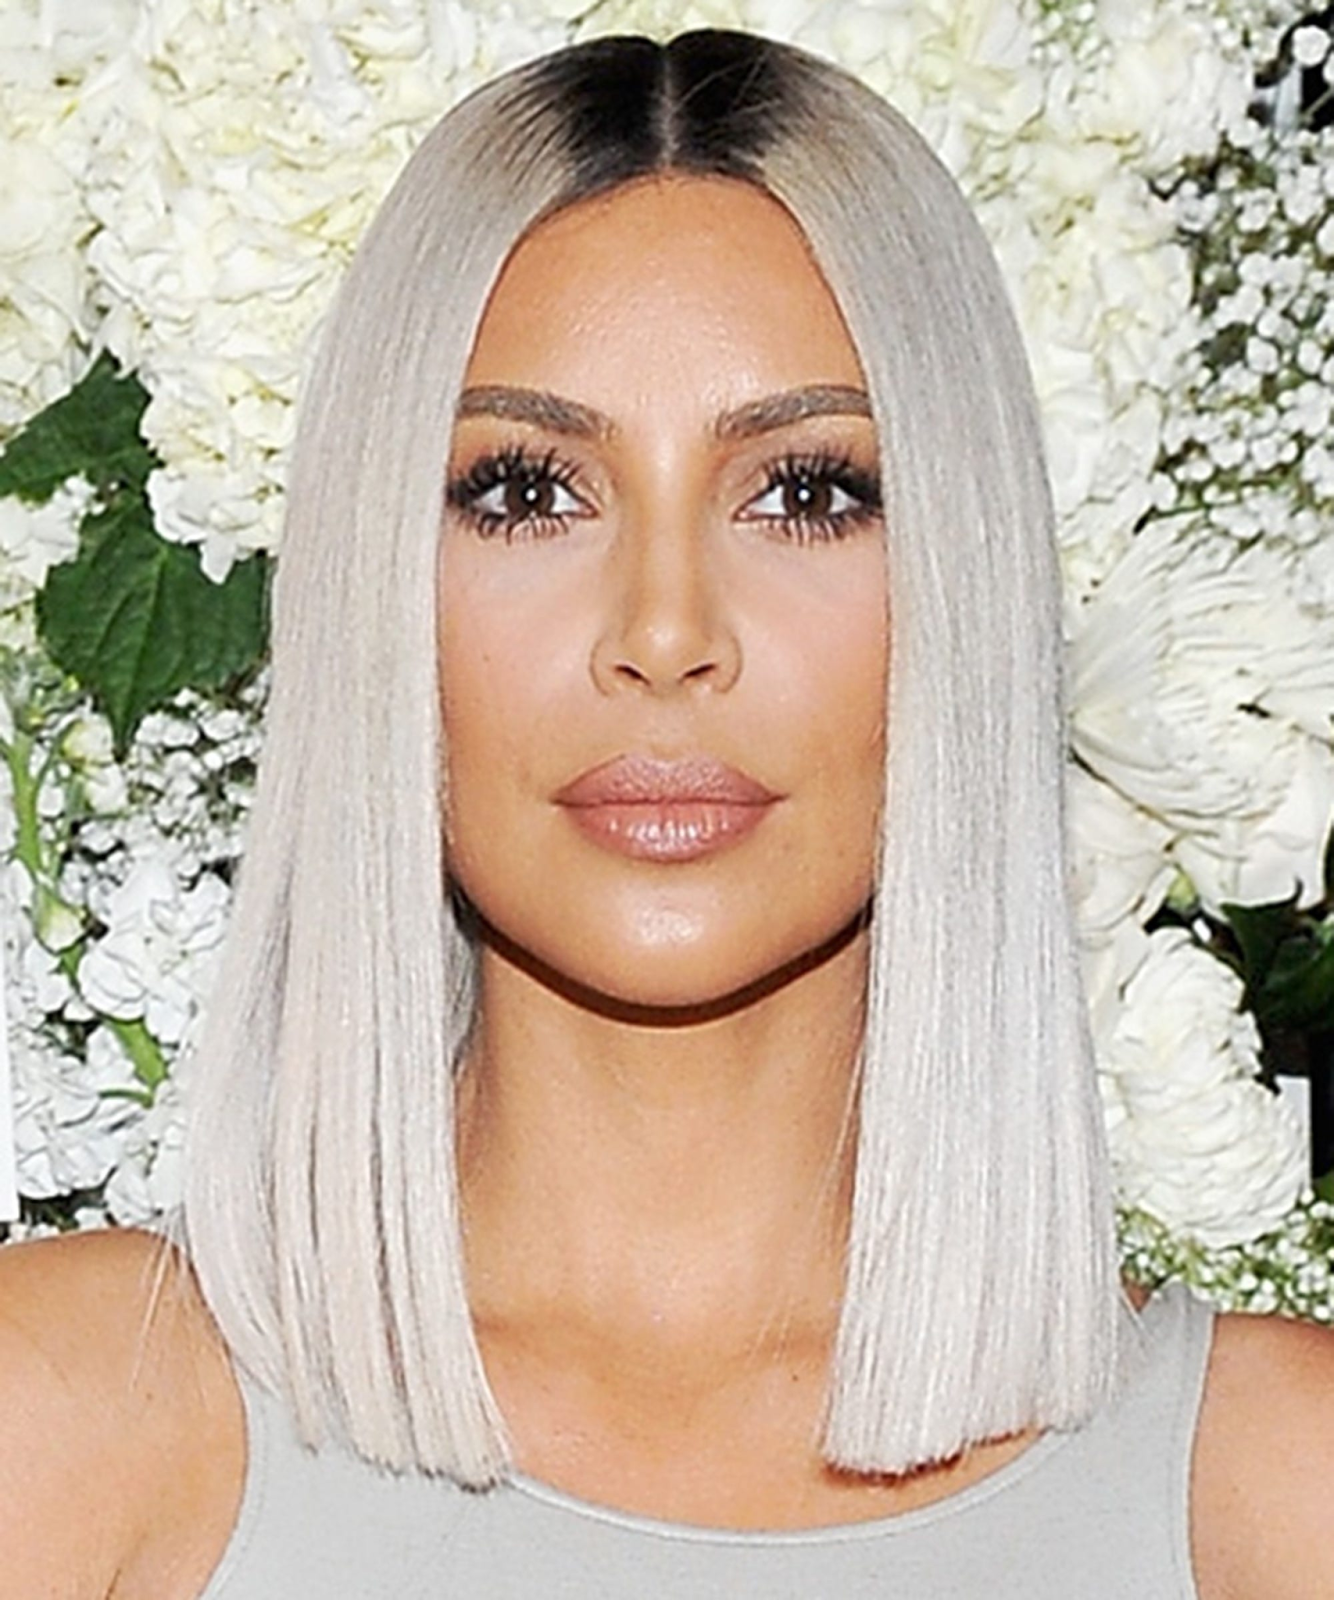 Picture of Kim kardashian rocking a hot hair dye look